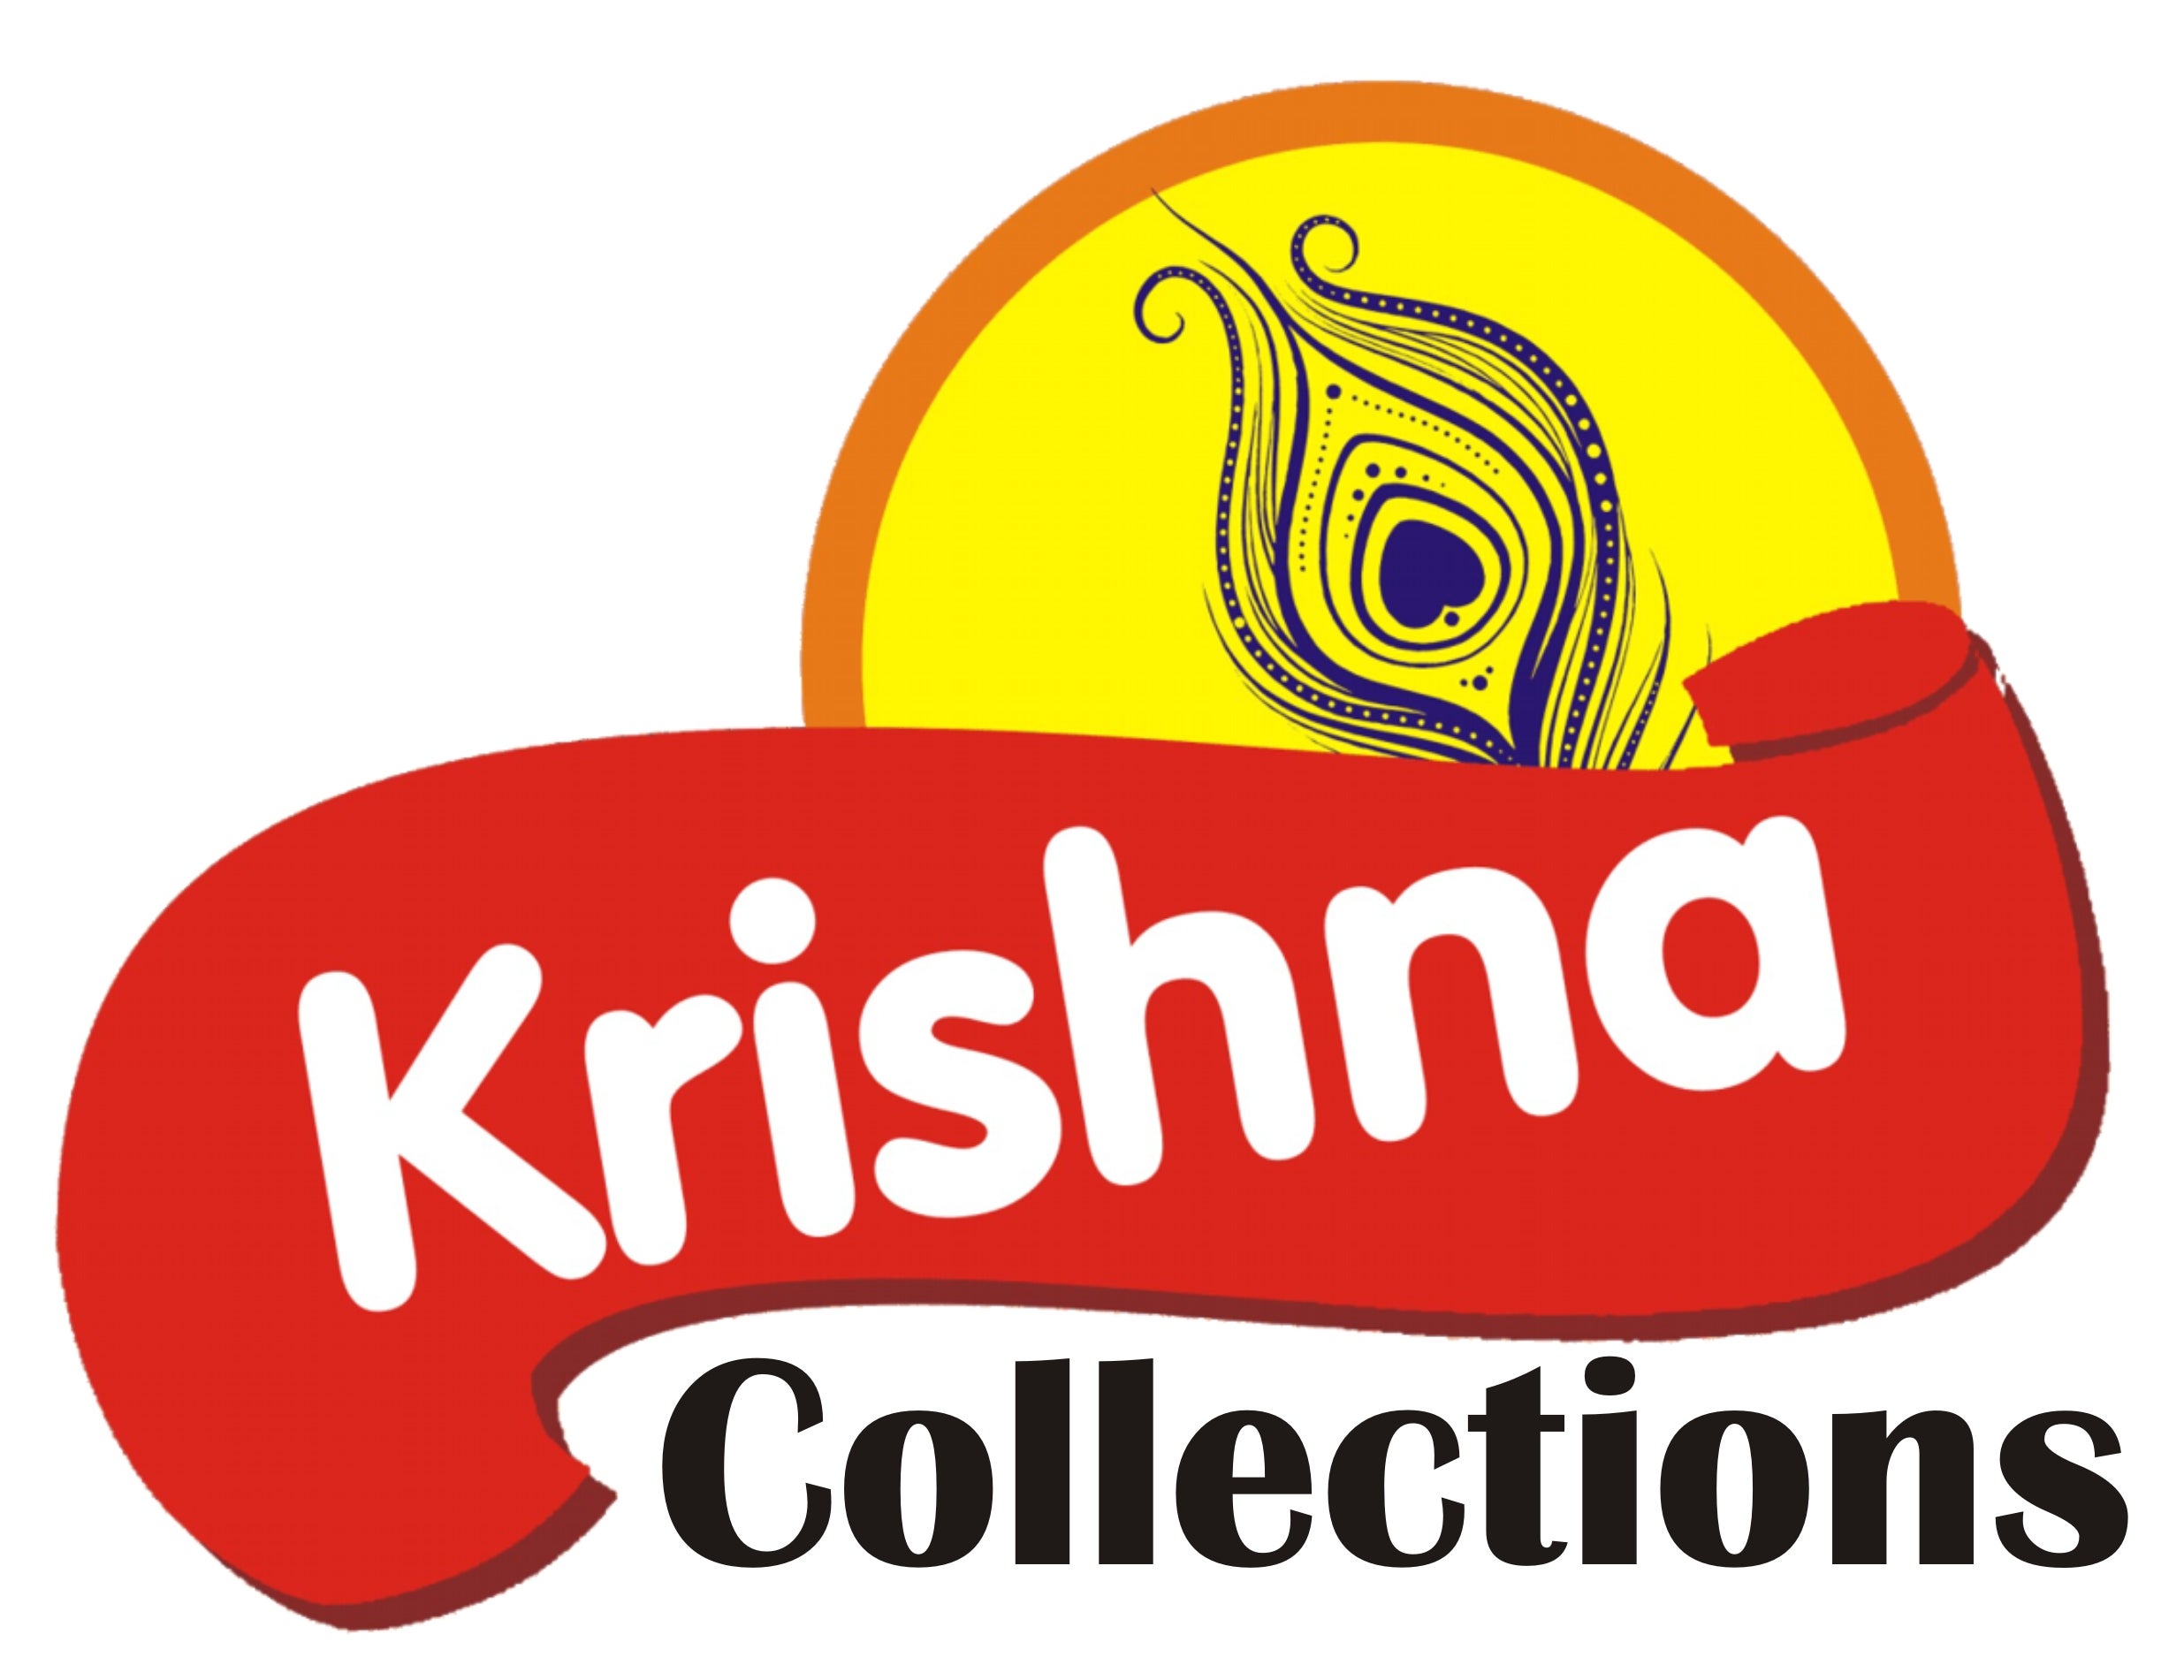 Krishna logo hi-res stock photography and images - Alamy